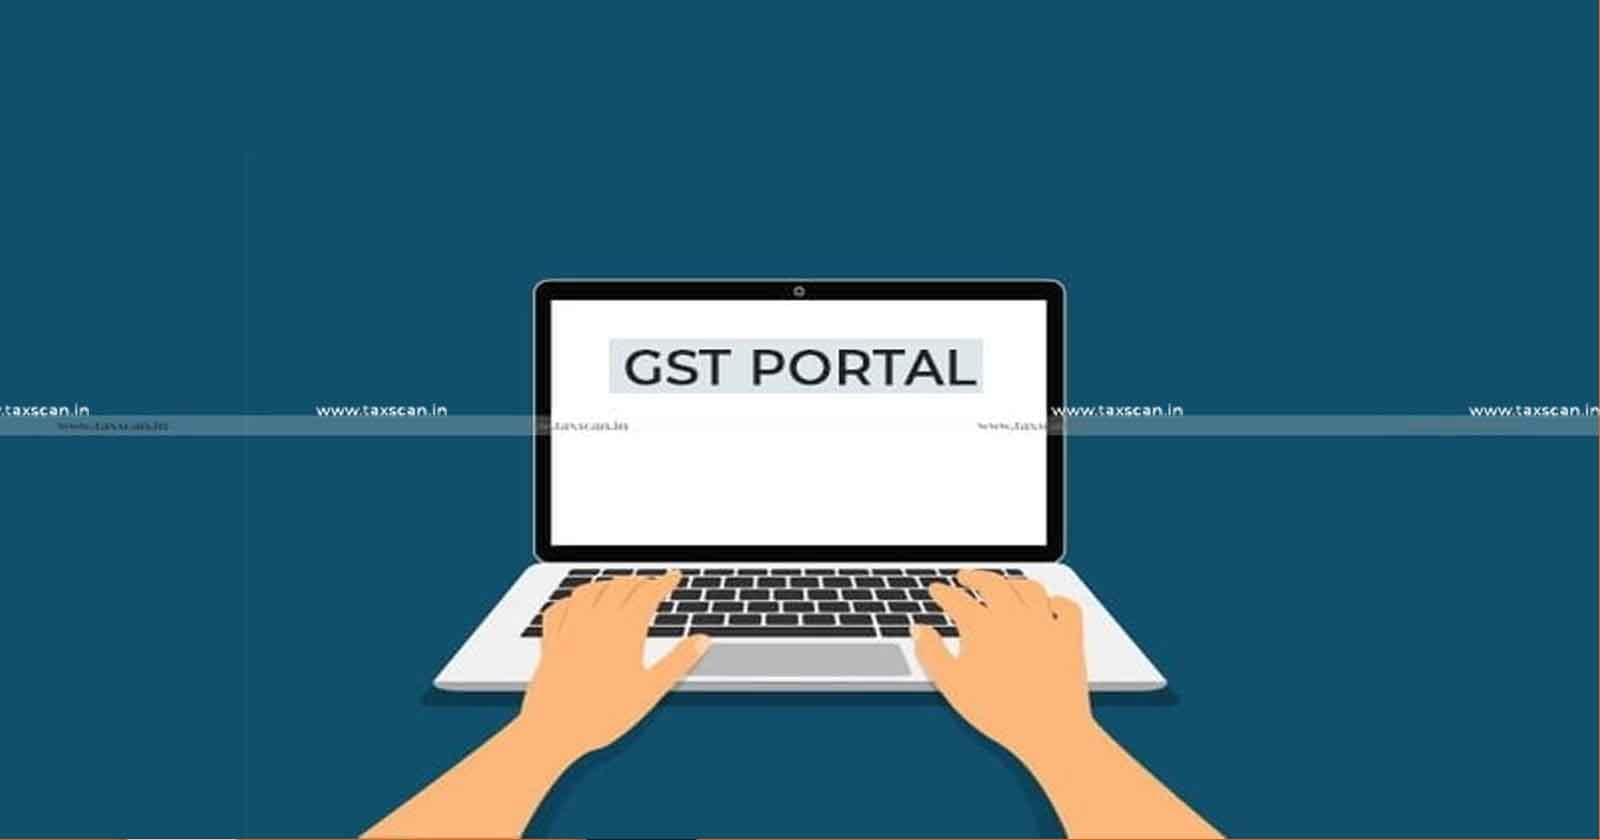 enrol in Common GST Portal - Common GST Portal - GST Portal - belated Filing of Appeal - Filing of Appeal - Orissa Highcourt - AO - Reassessment - taxscan